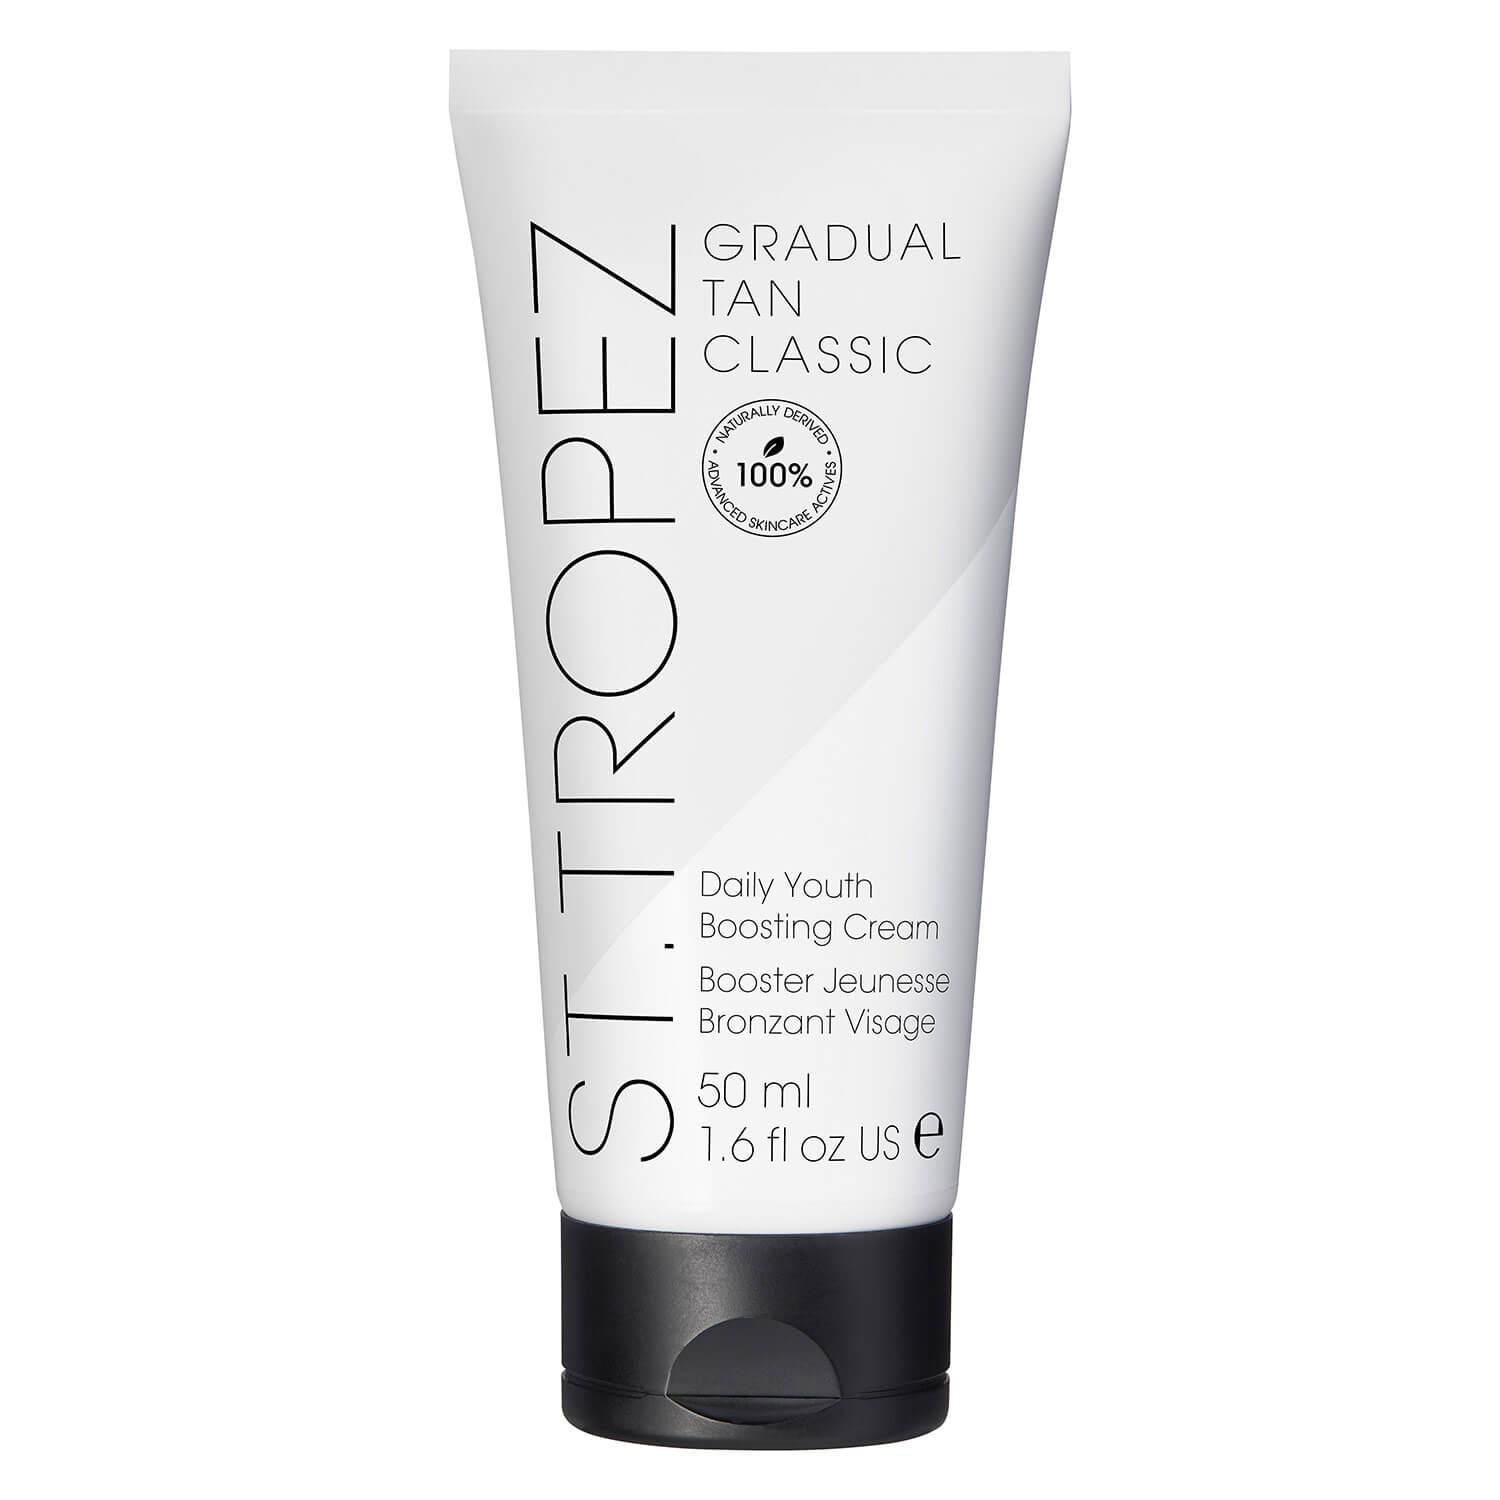 St.Tropez - Gradual Tan Classic Daily Youth Boosting Cream